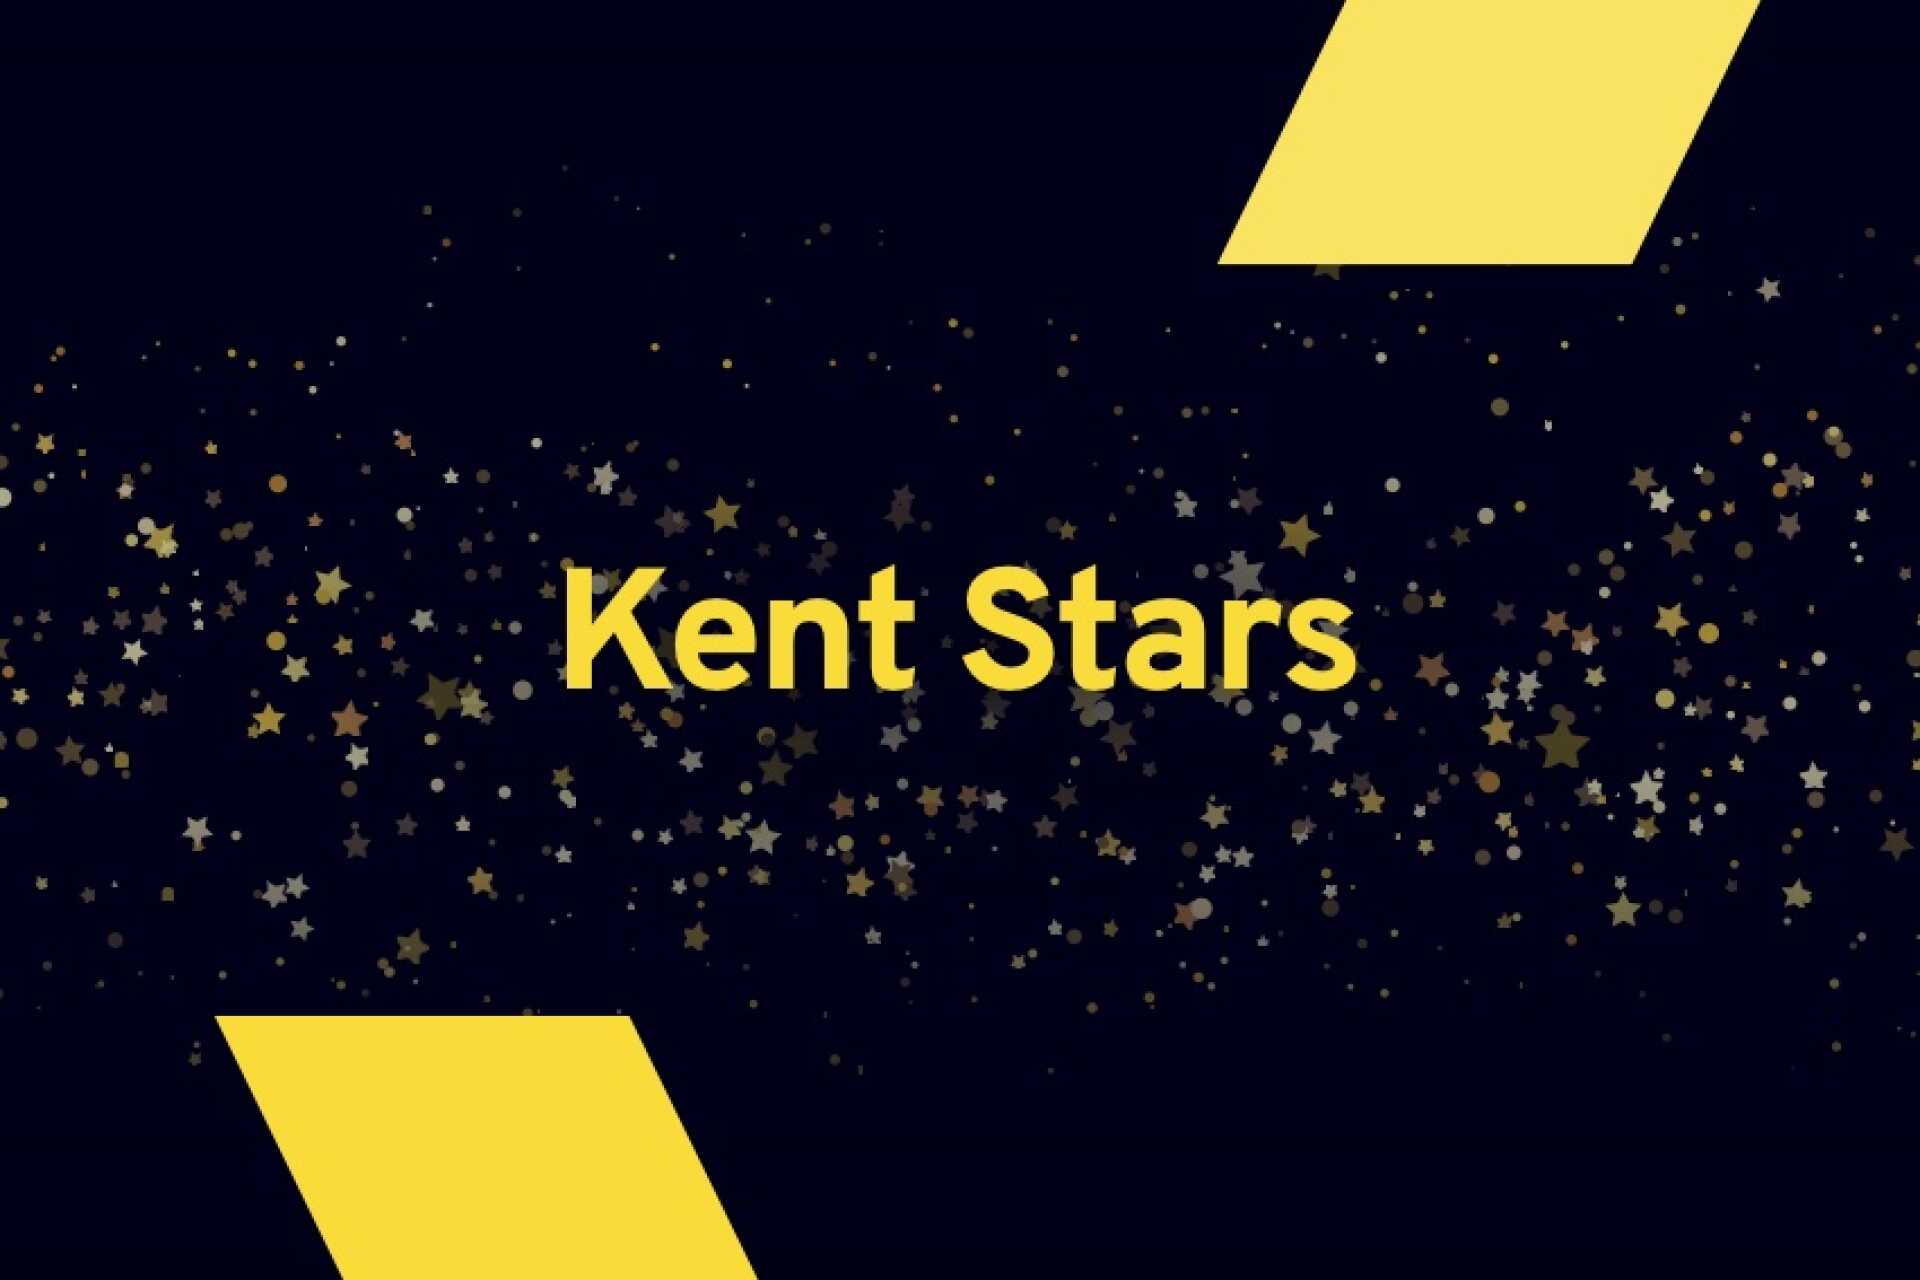 Kent Stars